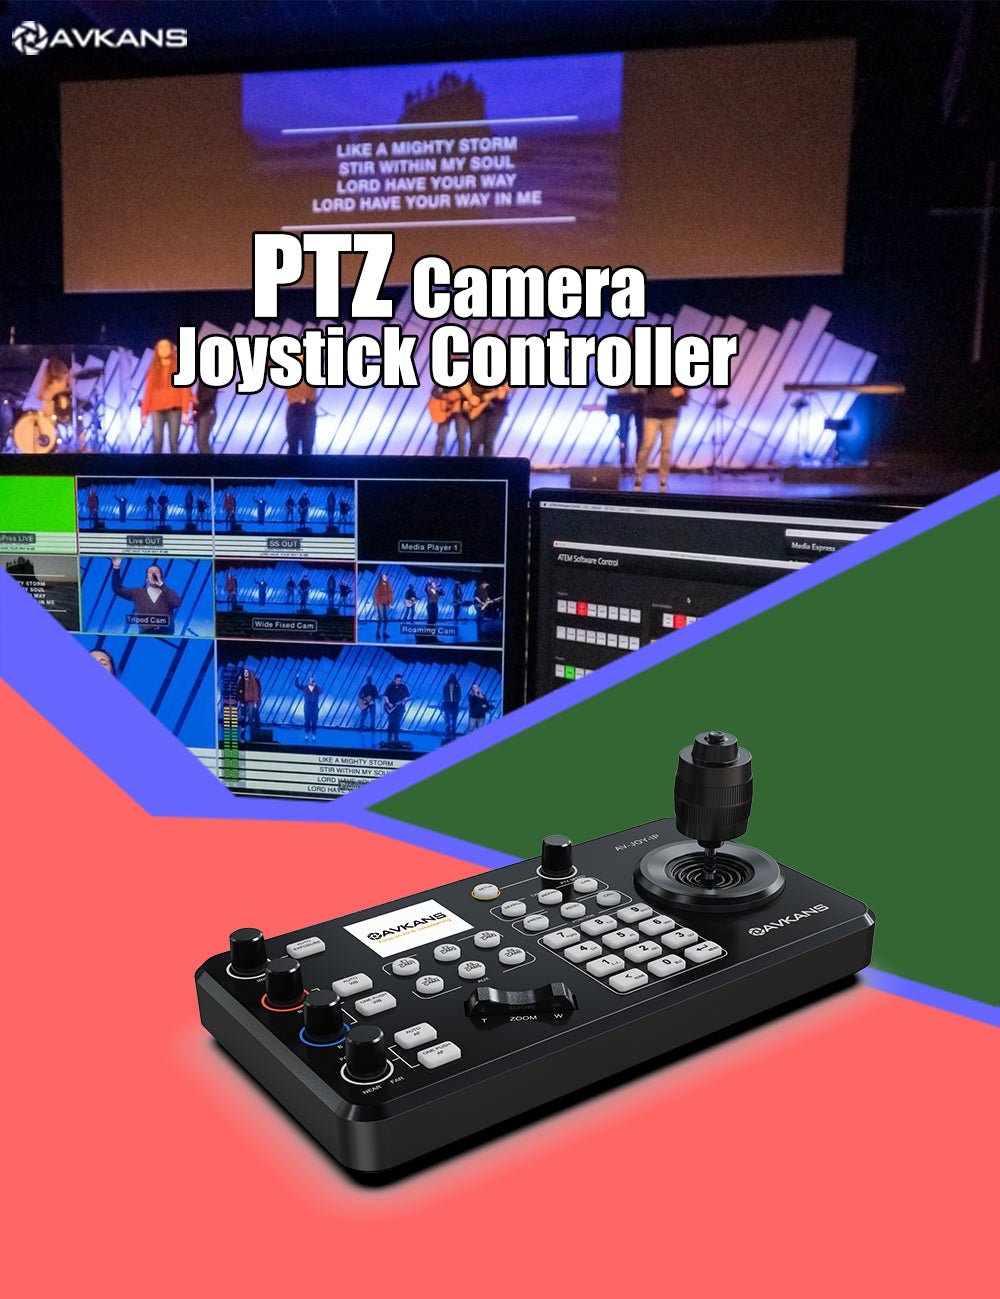 AVKANS Super PTZ Camera Joystick Controller, NDI Camera Controller Keyboard  with 4D Joystick for Live Streaming, Onvif Visca Over IP RS422 RS485 RS232  